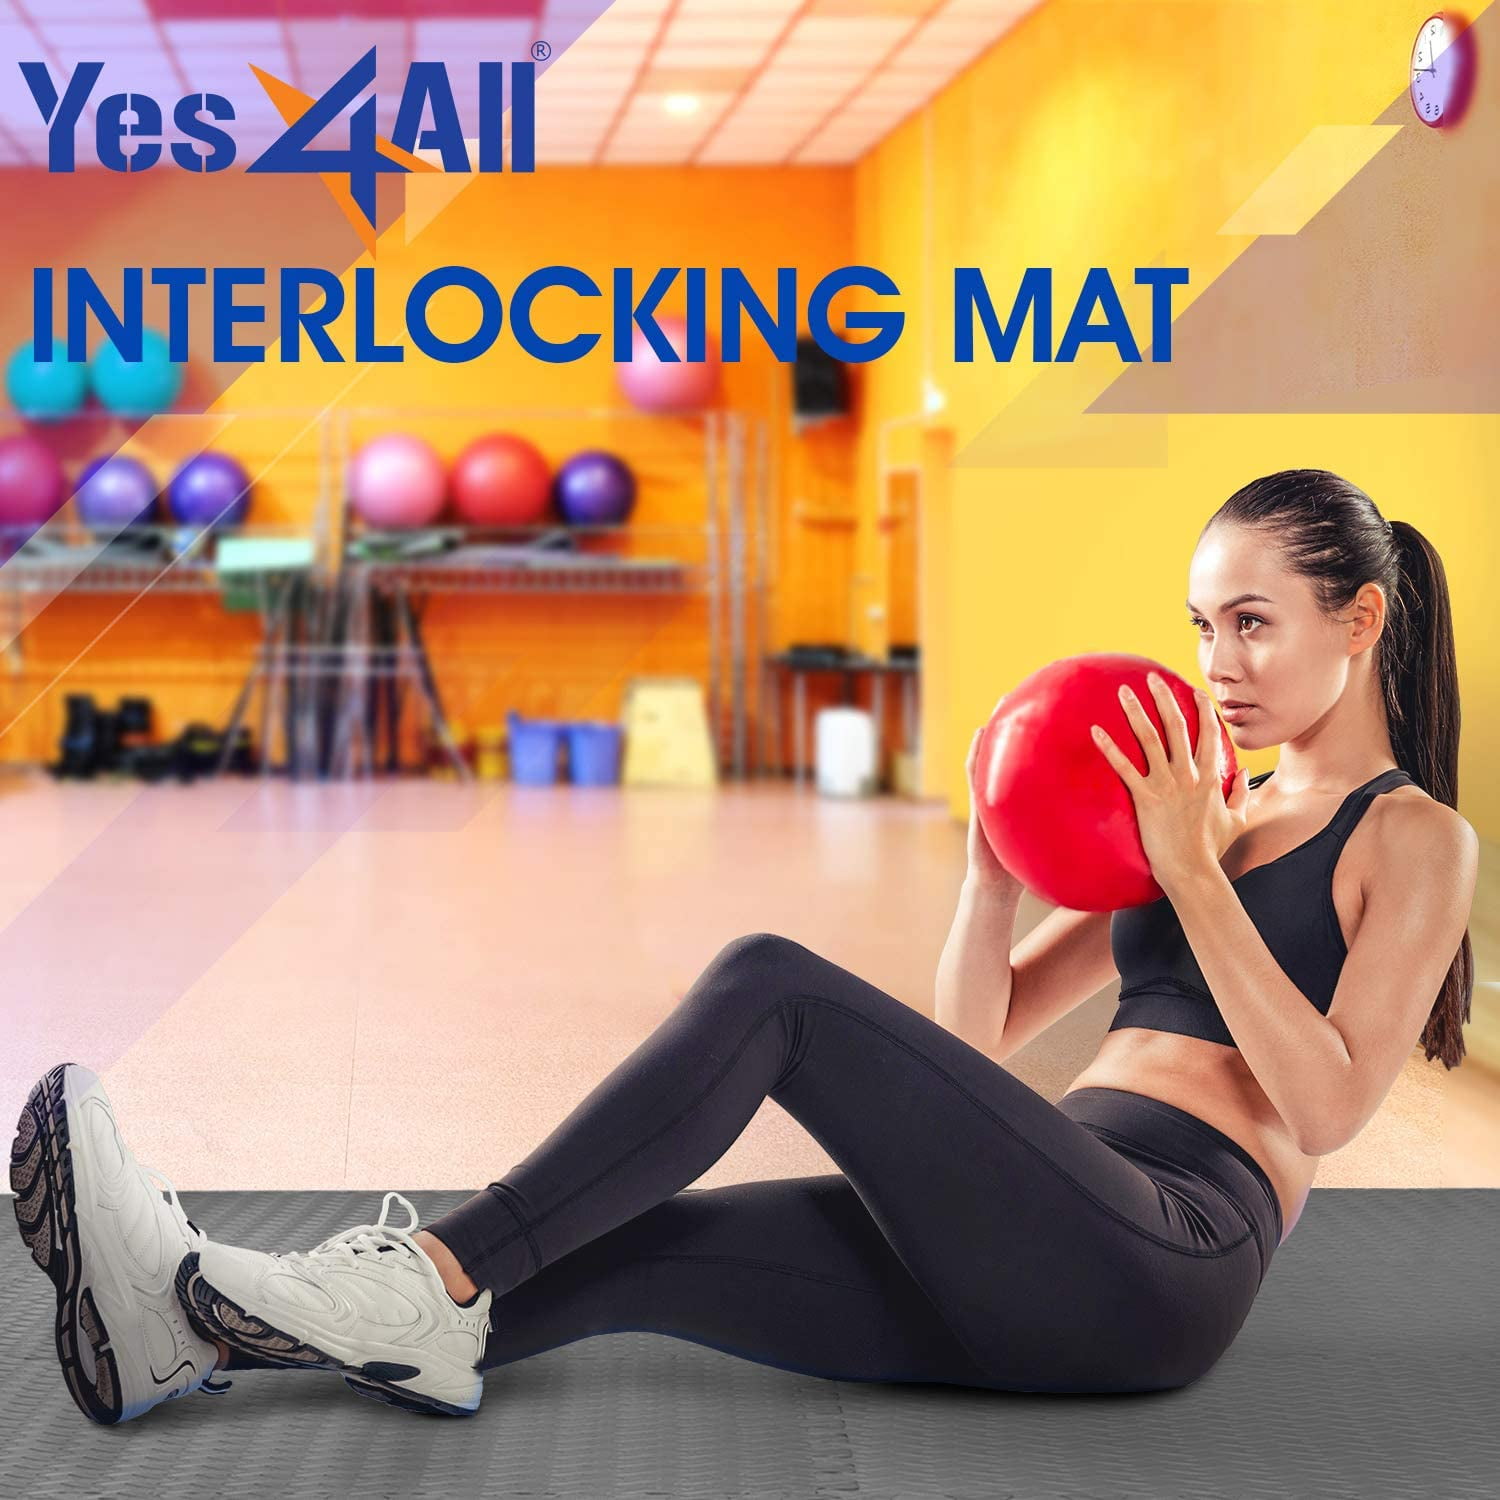 Yes4all Interlocking Exercise Foam Mats Cover 24, 48 & 120 Sqft (multi-color) - Granite Mats Walnut - 48sqft (12 Tiles), Gray